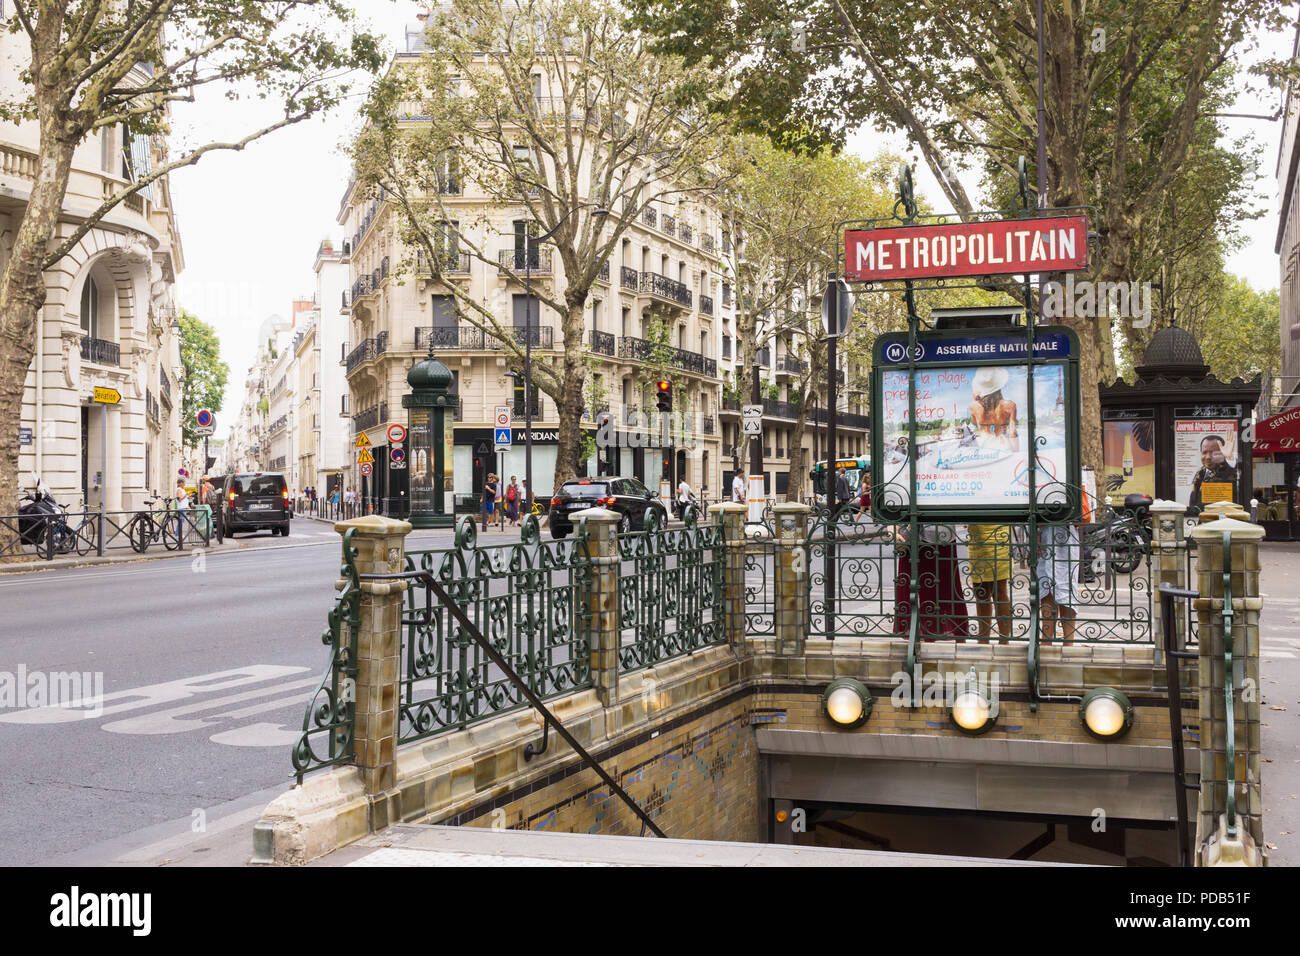 Pariser Metrostation Eingang - Eingang zum Pariser Metrostation Assemblée Nationale in der 7. Arrondissement, Frankreich, Europa. Stockfoto